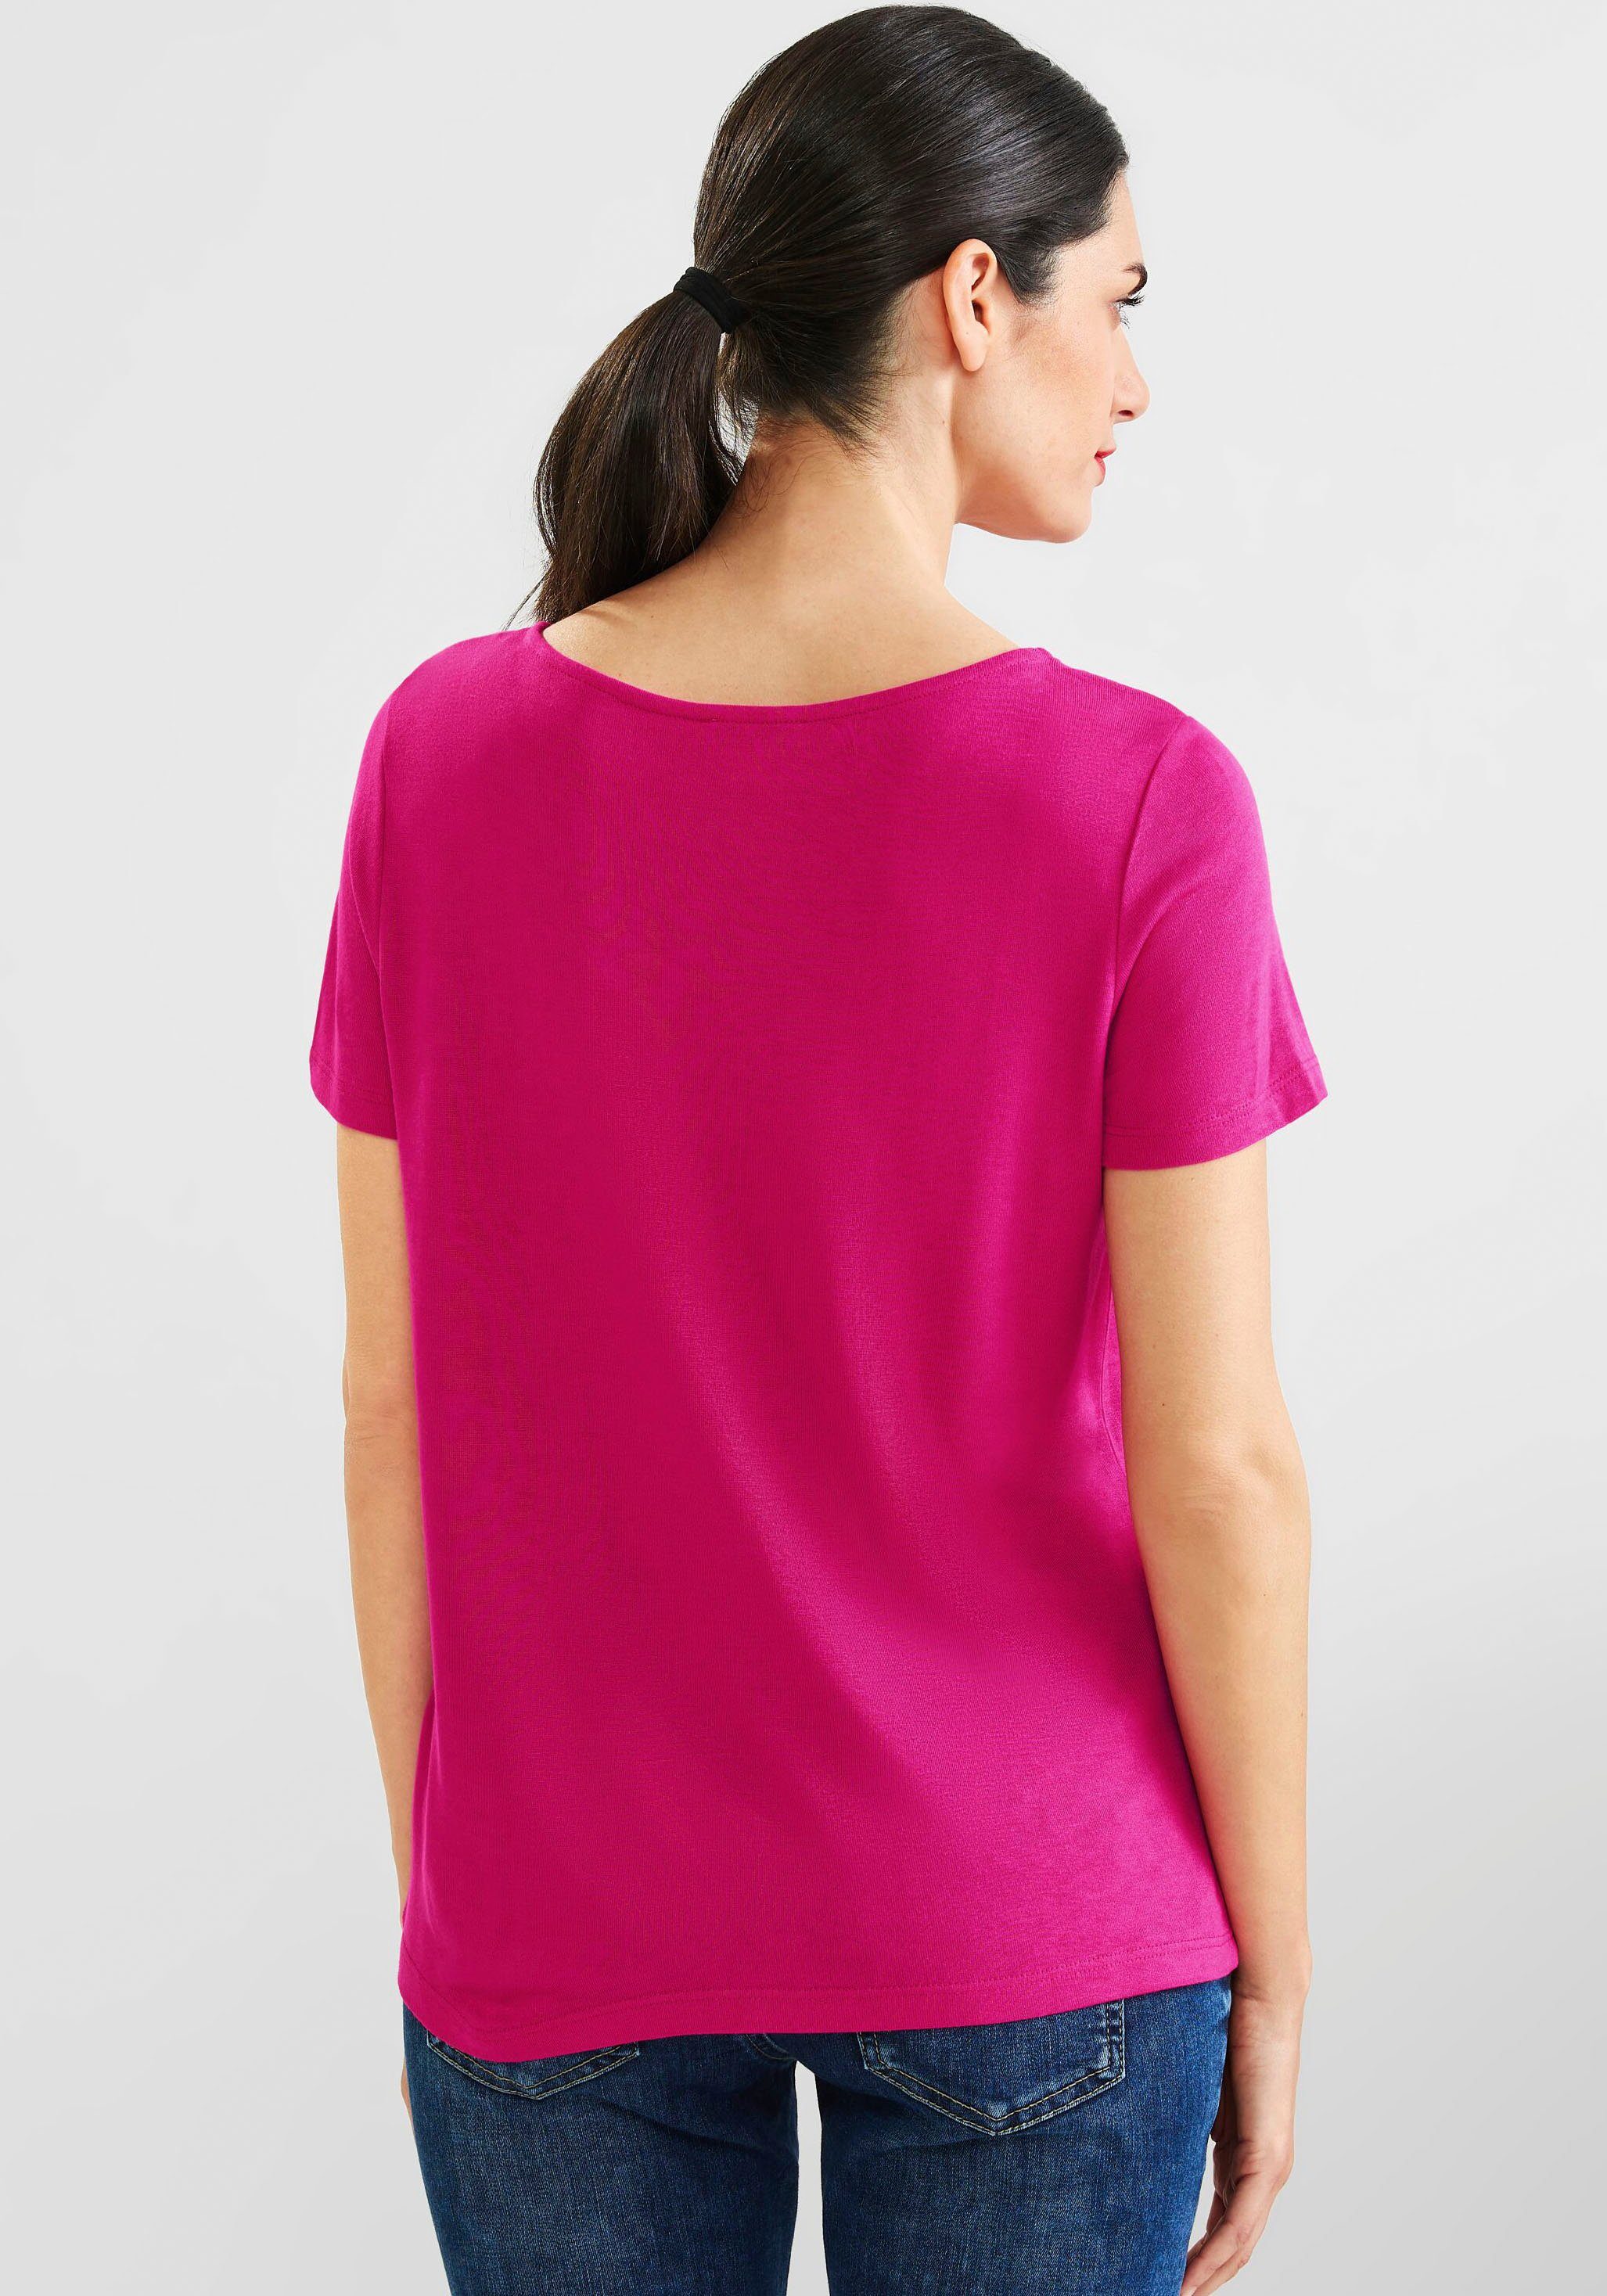 ONE STREET Unifarbe nu pink Spitzenshirt in